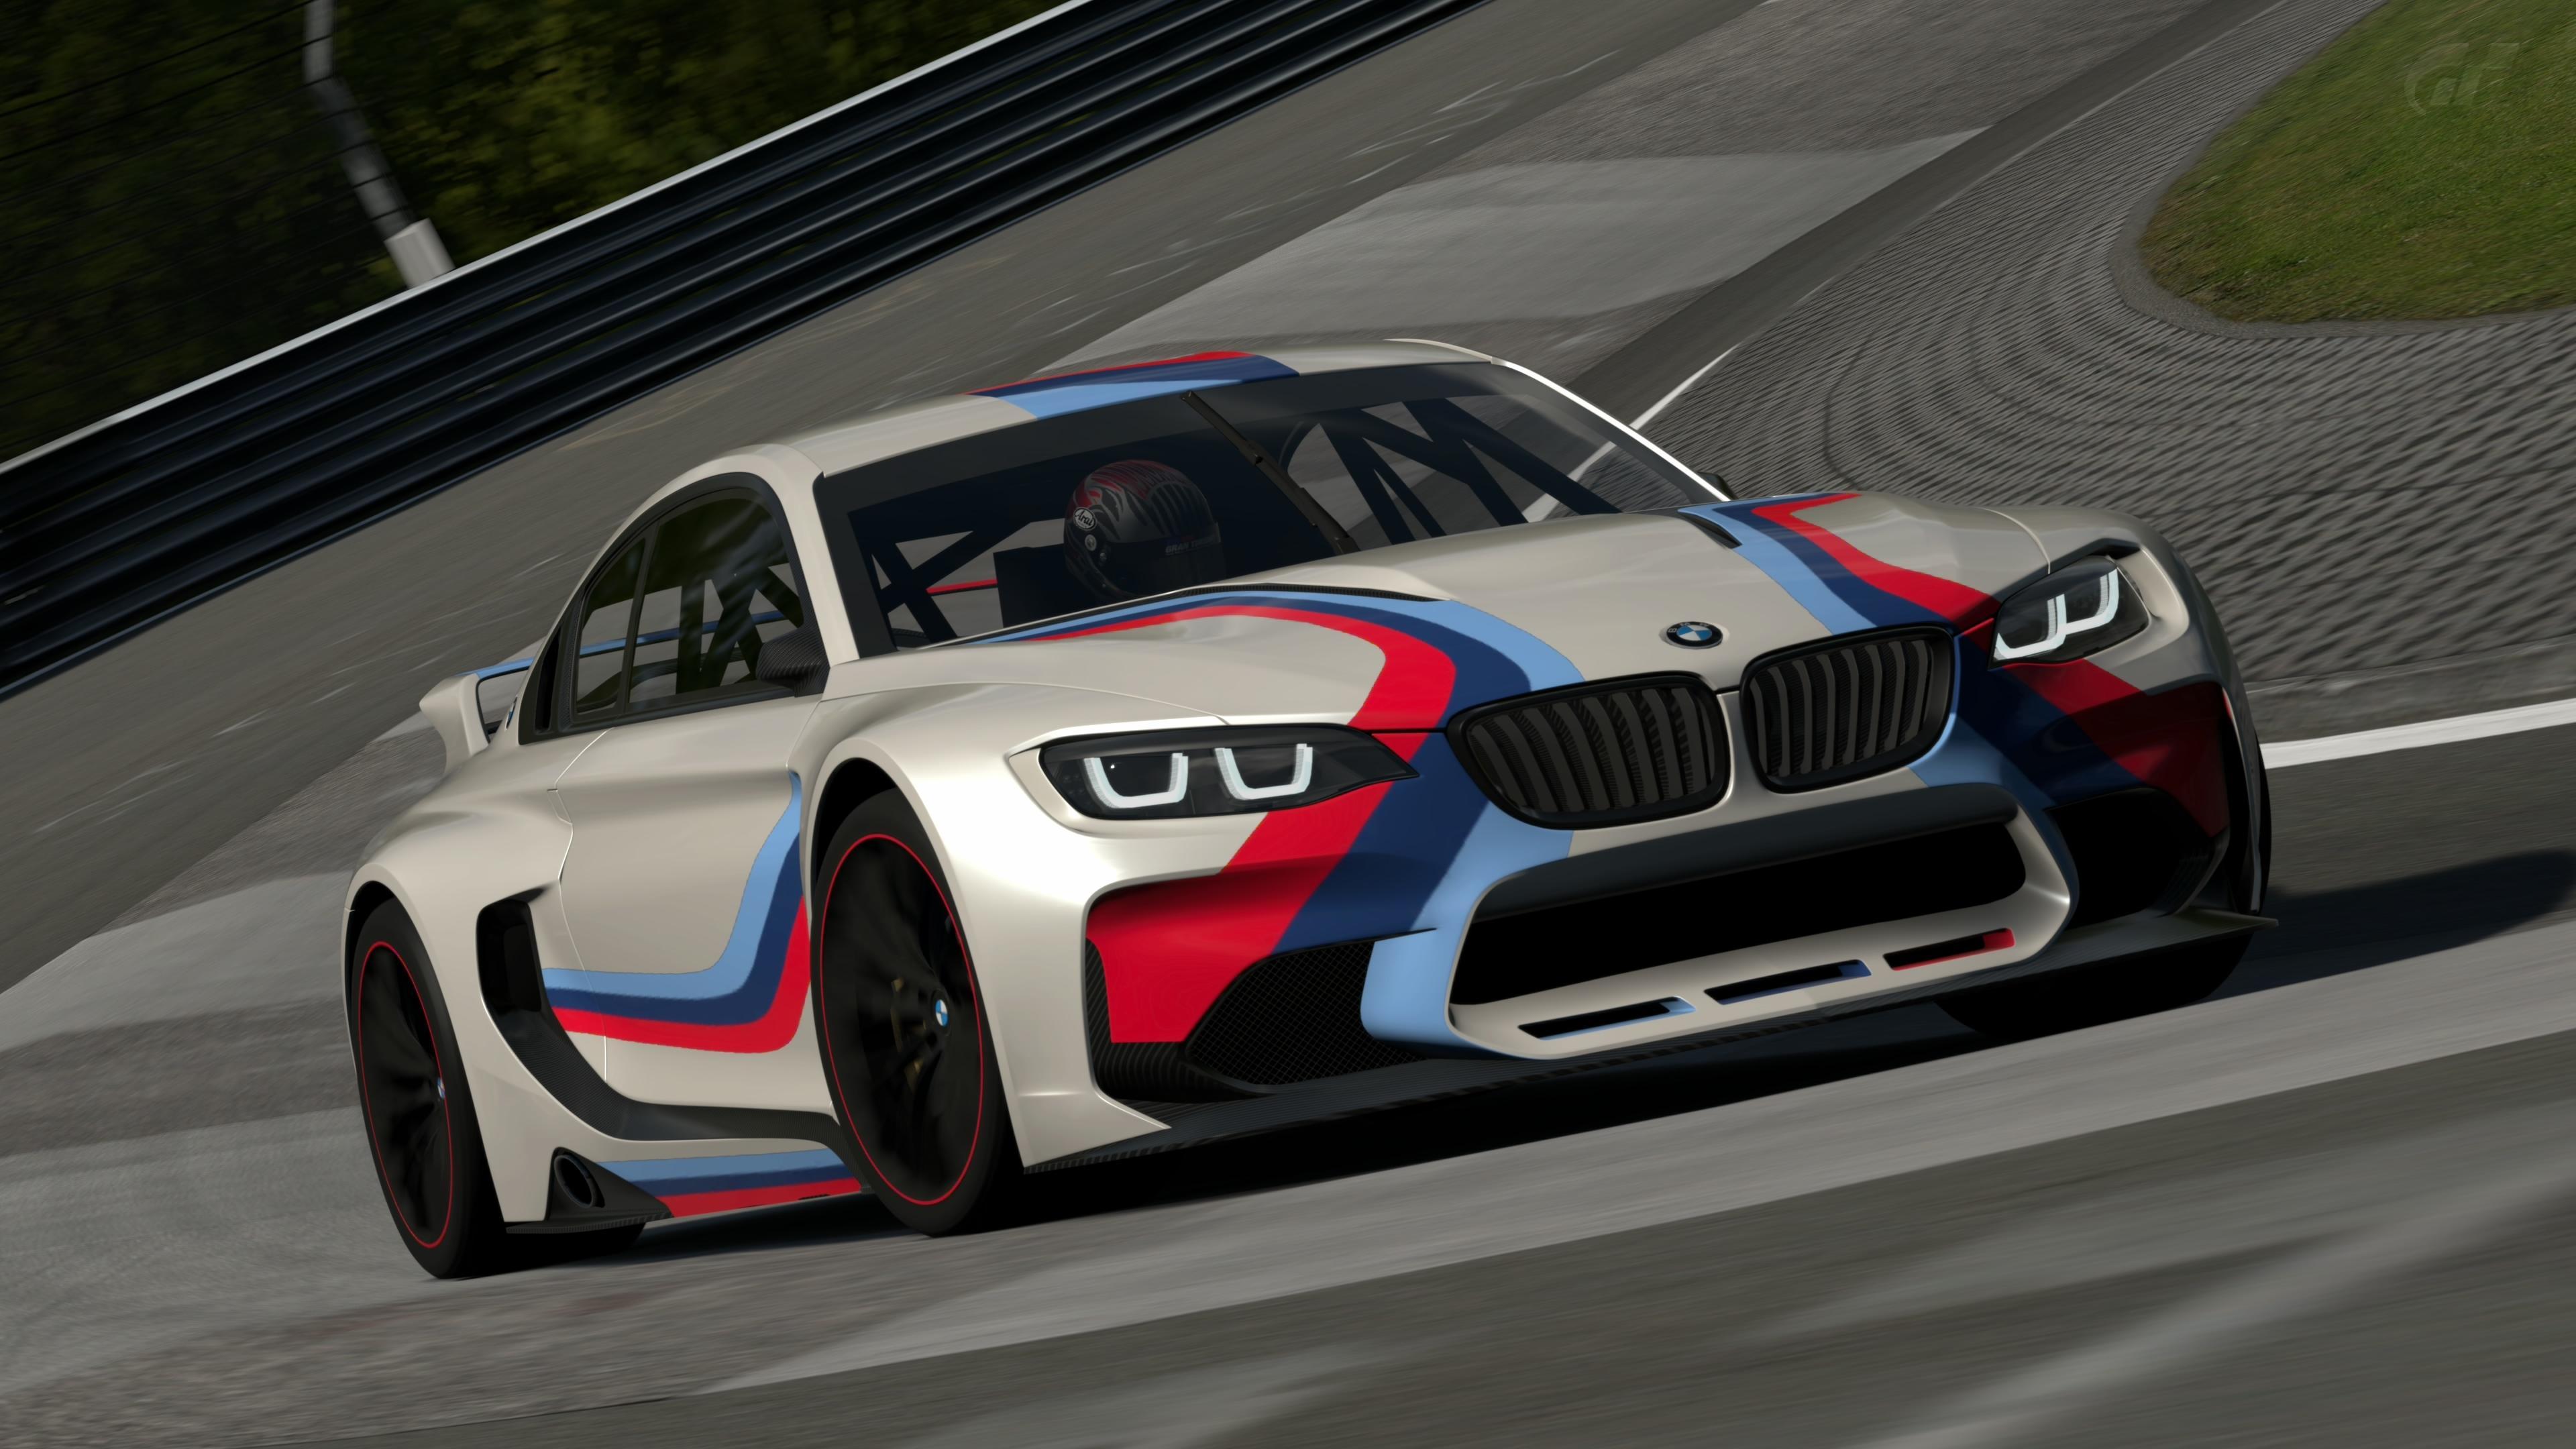 HD BMW race car in Gran Turismo 6 Wallpaper. Download Free